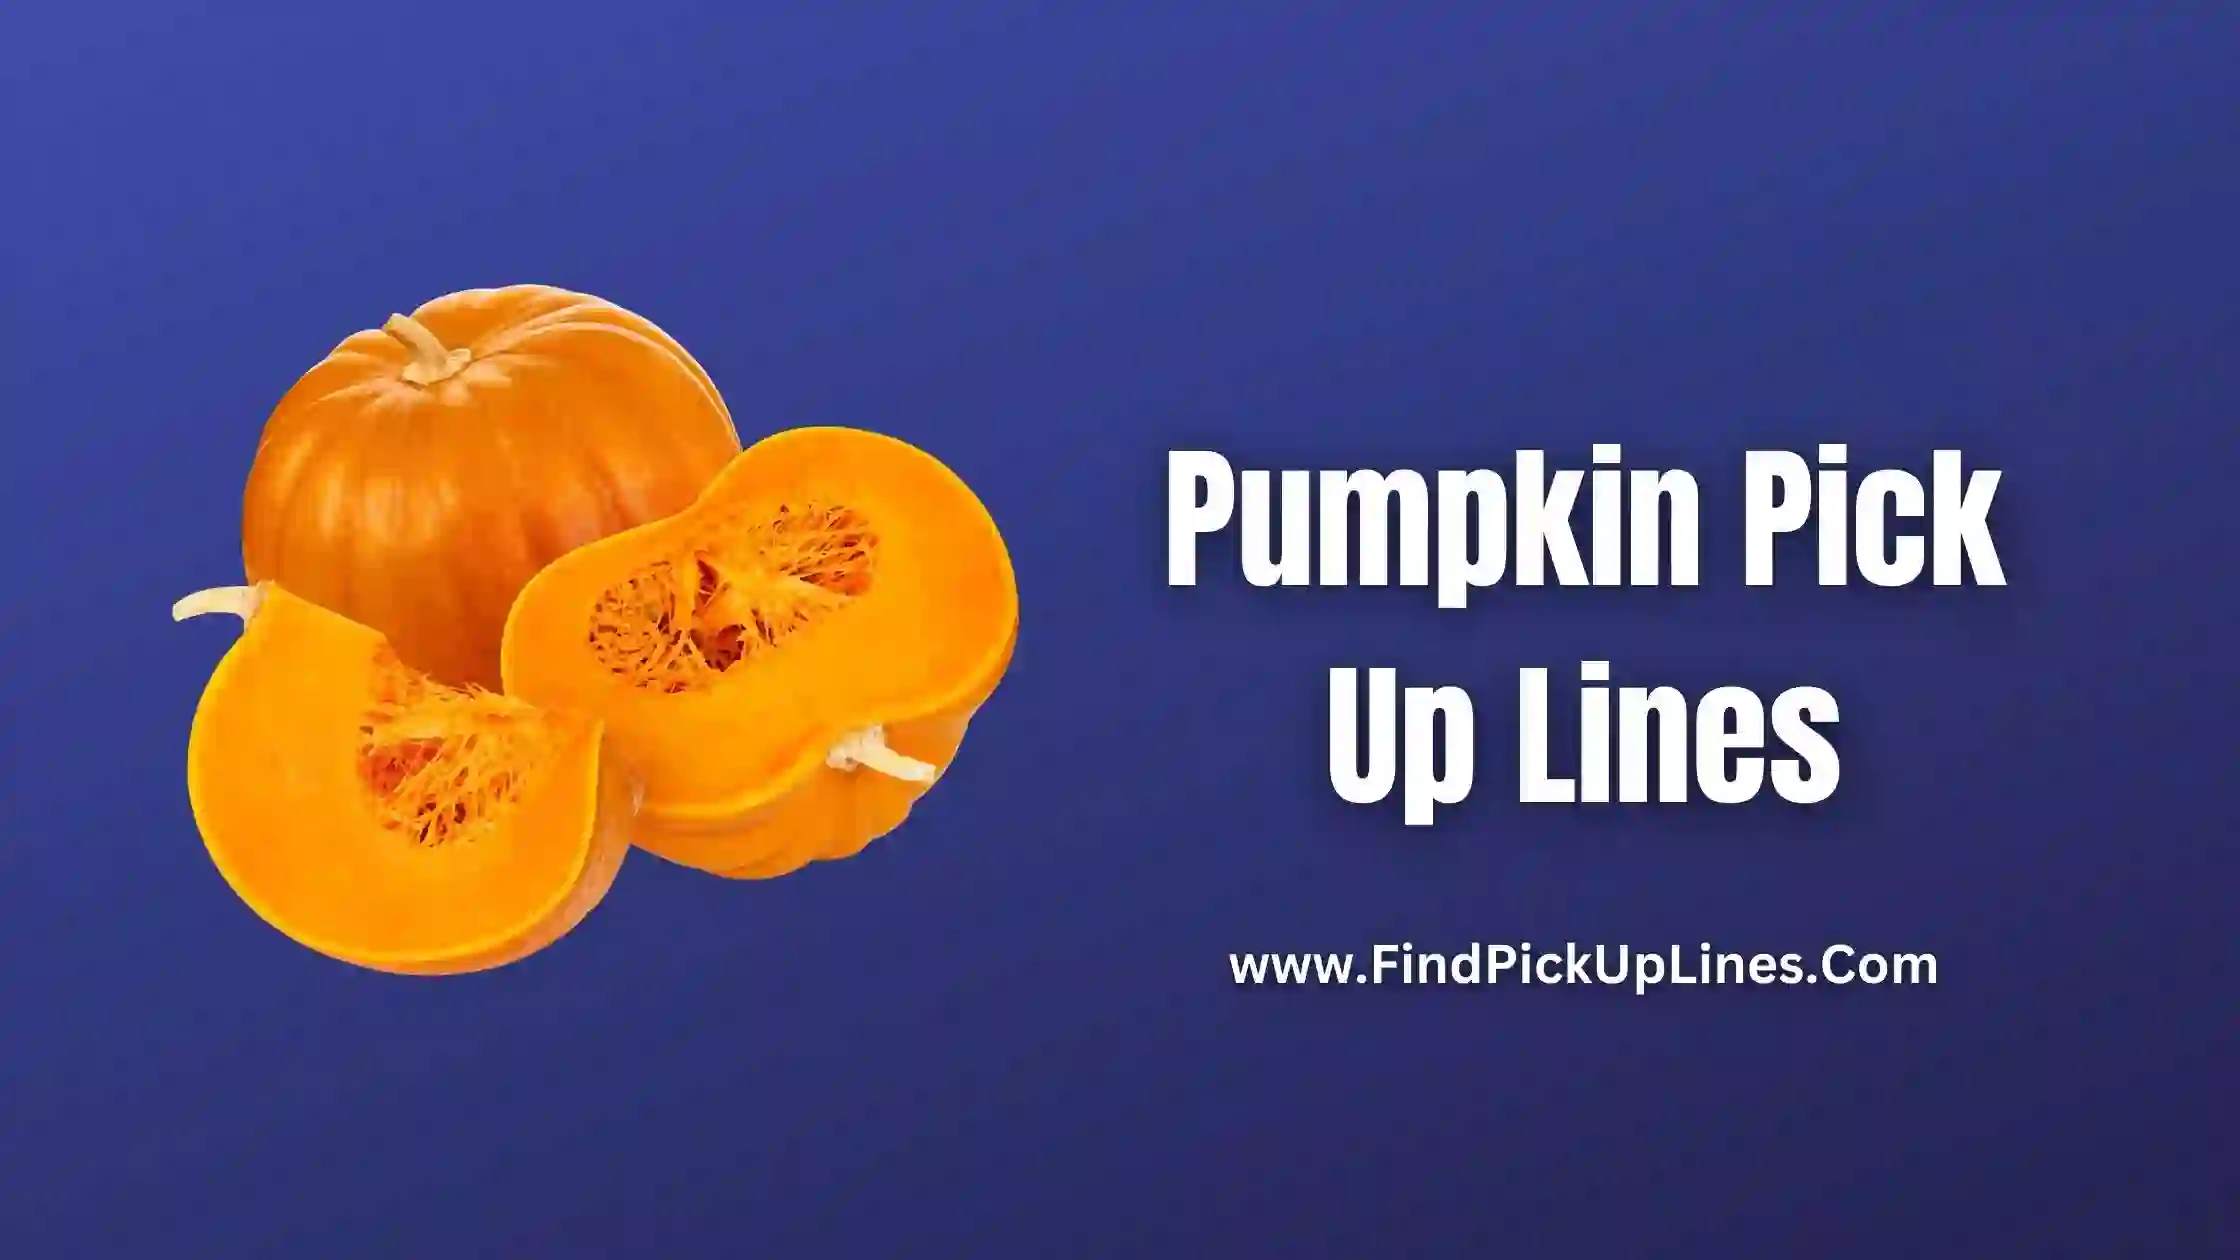 Pumpkin Pick Up Lines